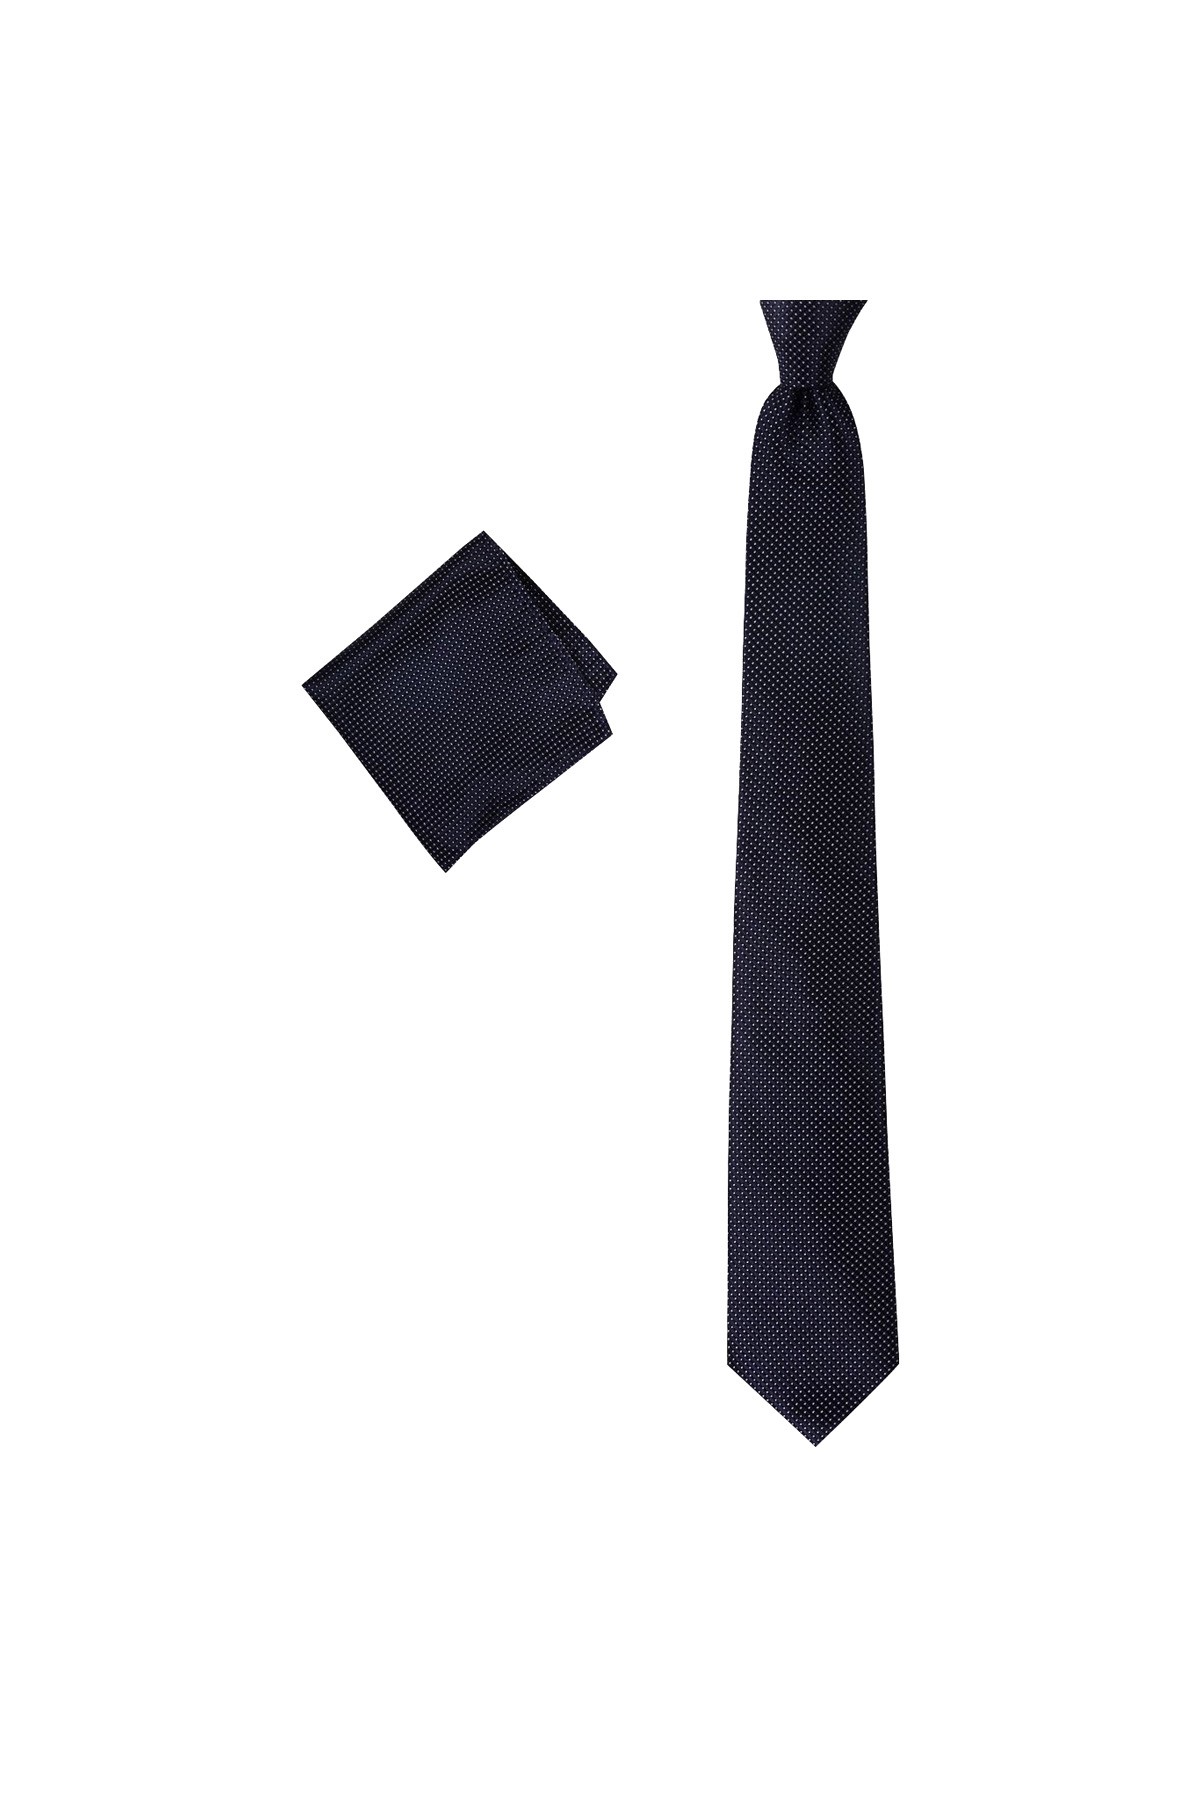 Klasik 8 cm genişliğinde mendilli kravat - Lacivert